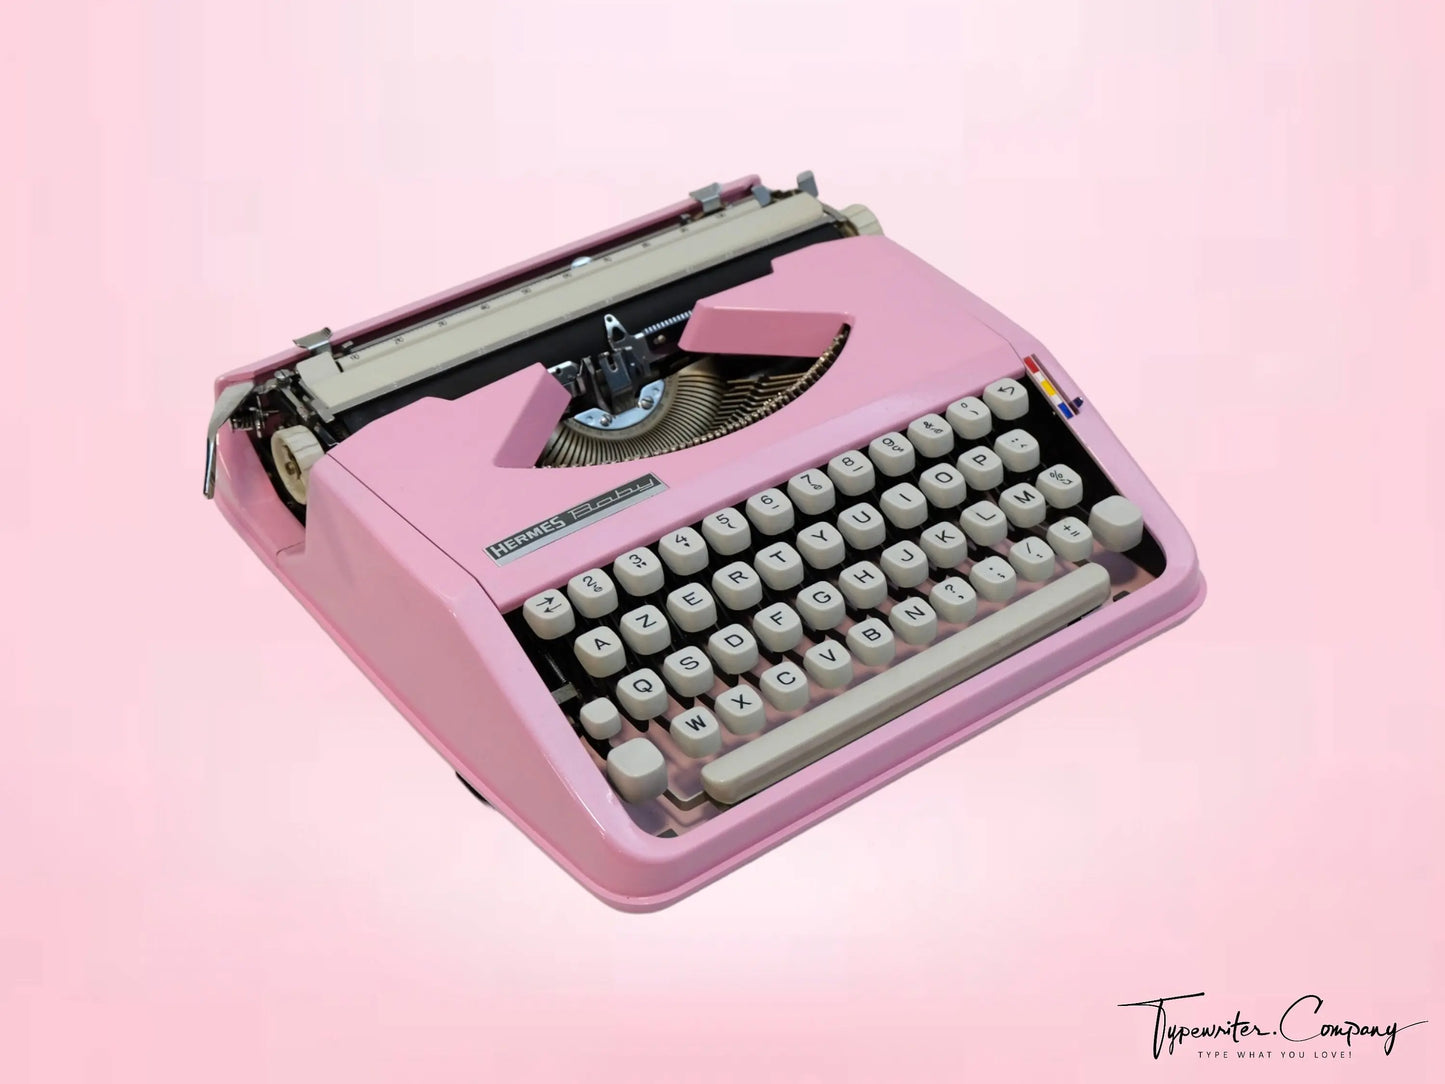 CURSIVE Barbie Pink Hermes Baby Manual Vintage Typewriter, Serviced - ElGranero Typewriter.Company